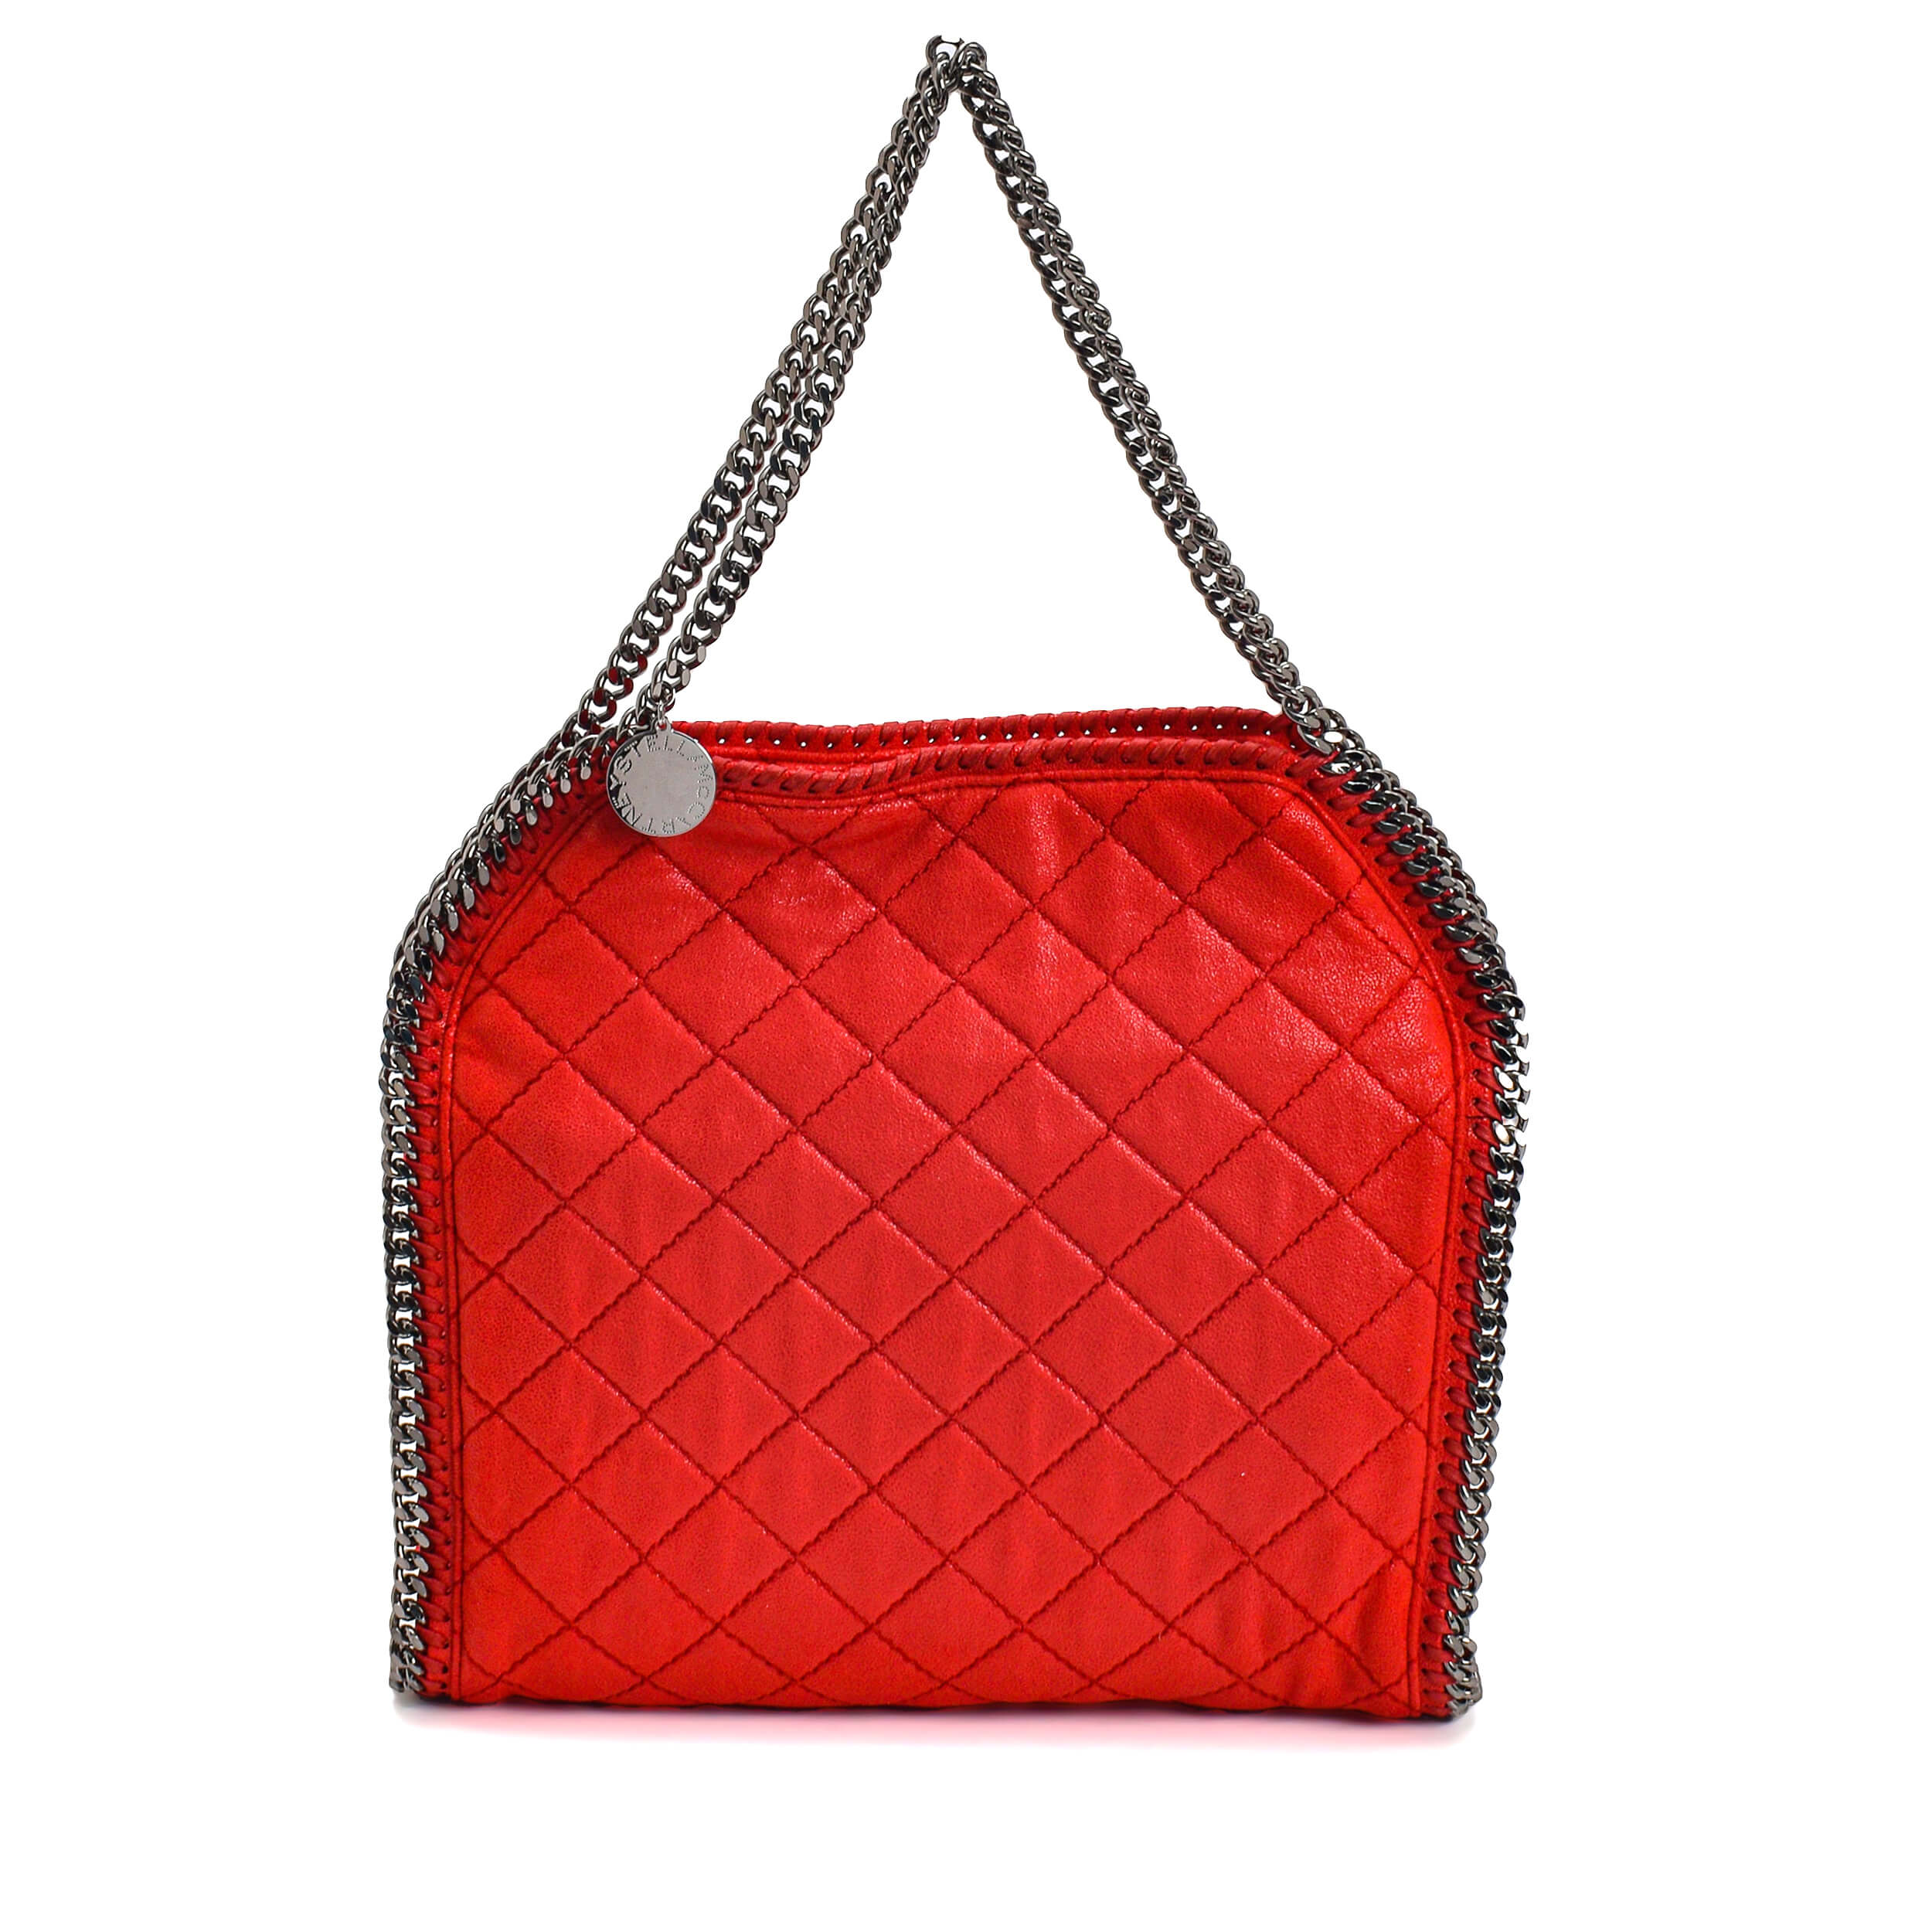 Stella McCartney - Red Quilted Medium Falabella Bag